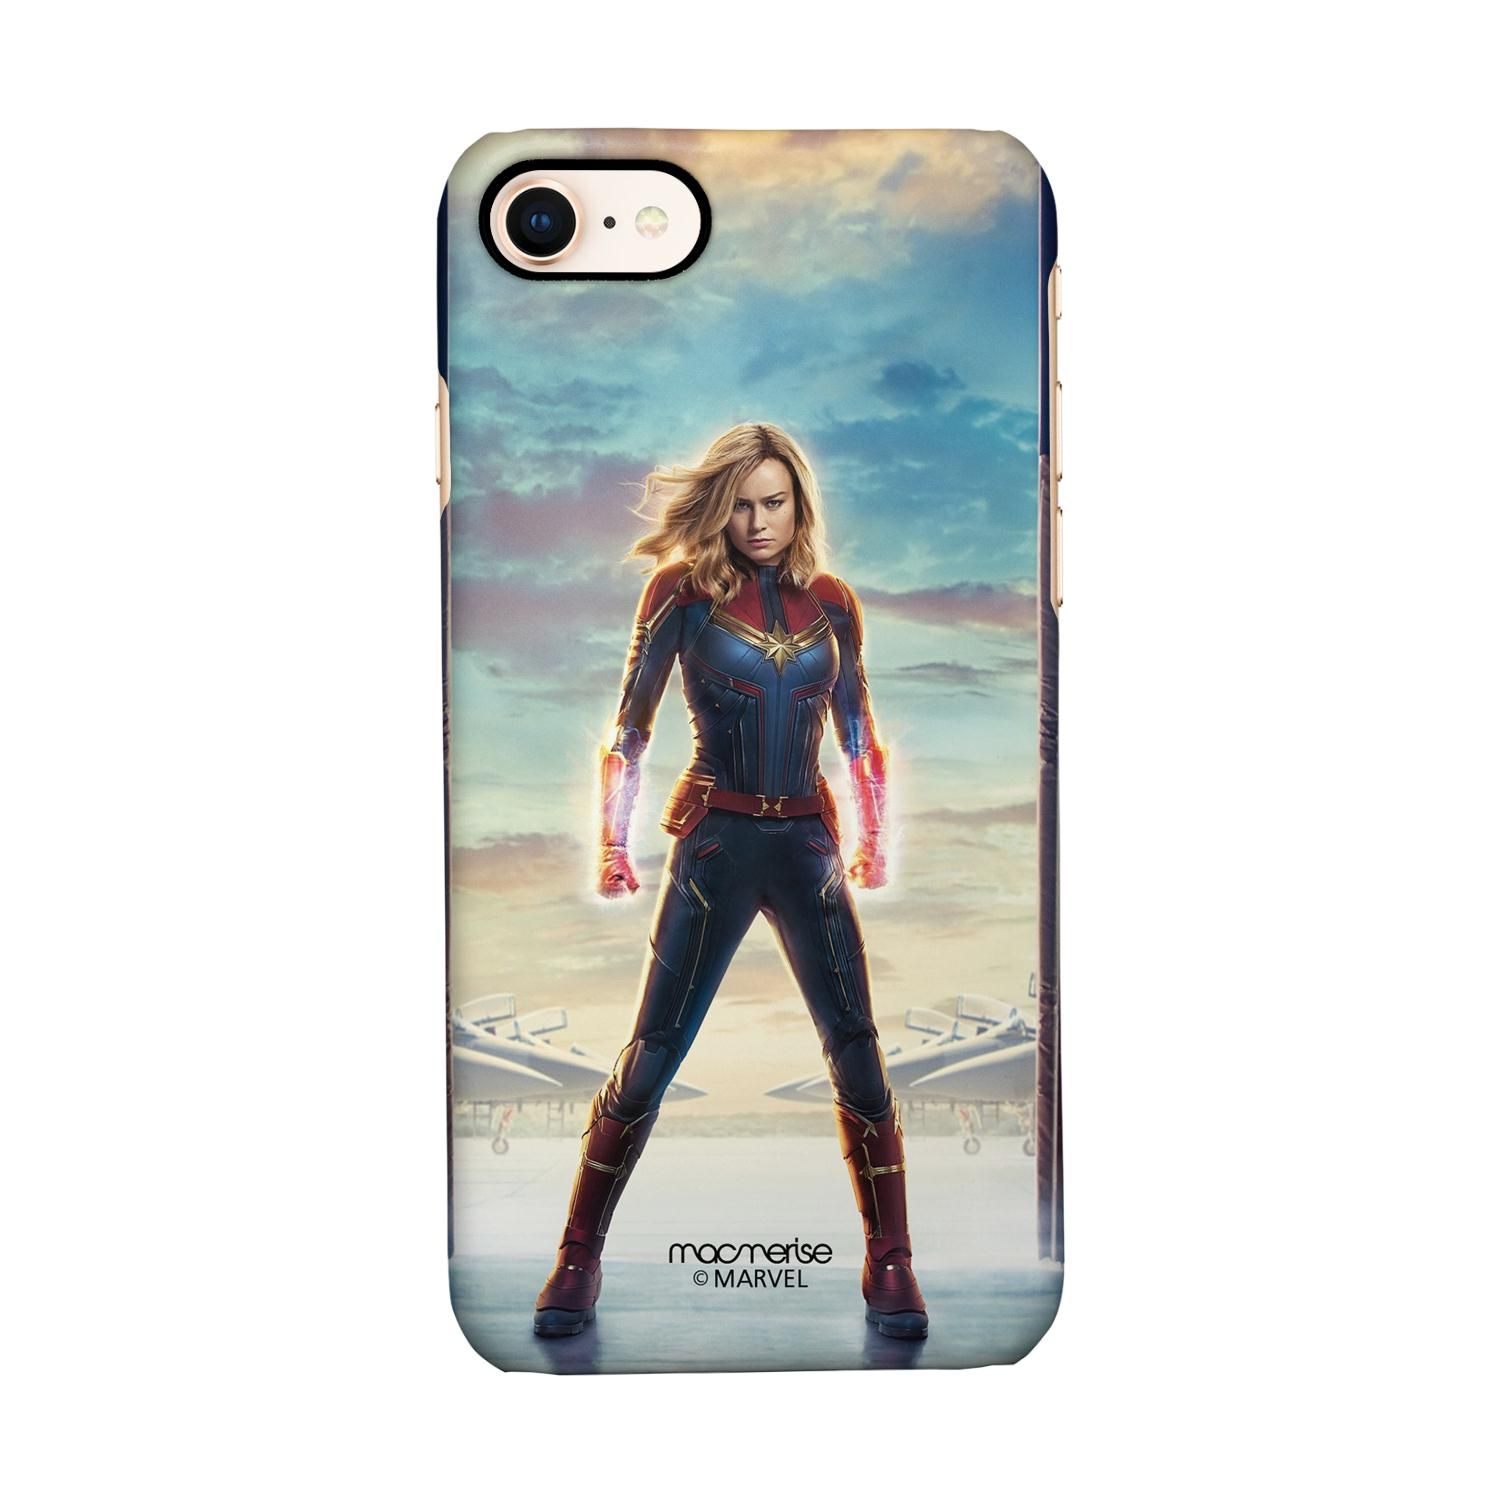 Buy Captain Marvel Poster - Sleek Phone Case for iPhone 8 Online